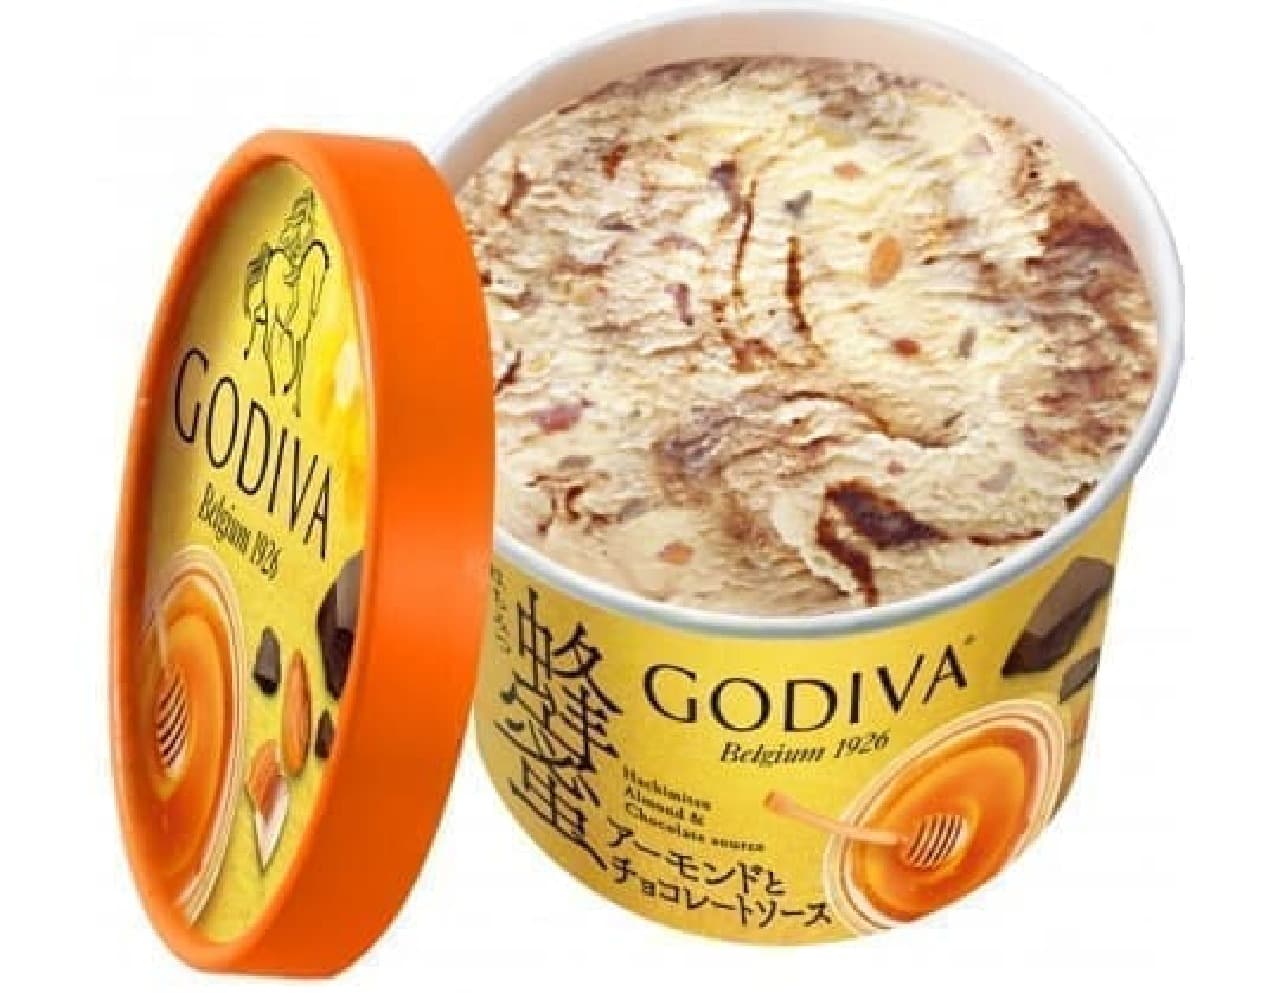 Godiva Cup Ice "Honey Almond and Chocolate Sauce"